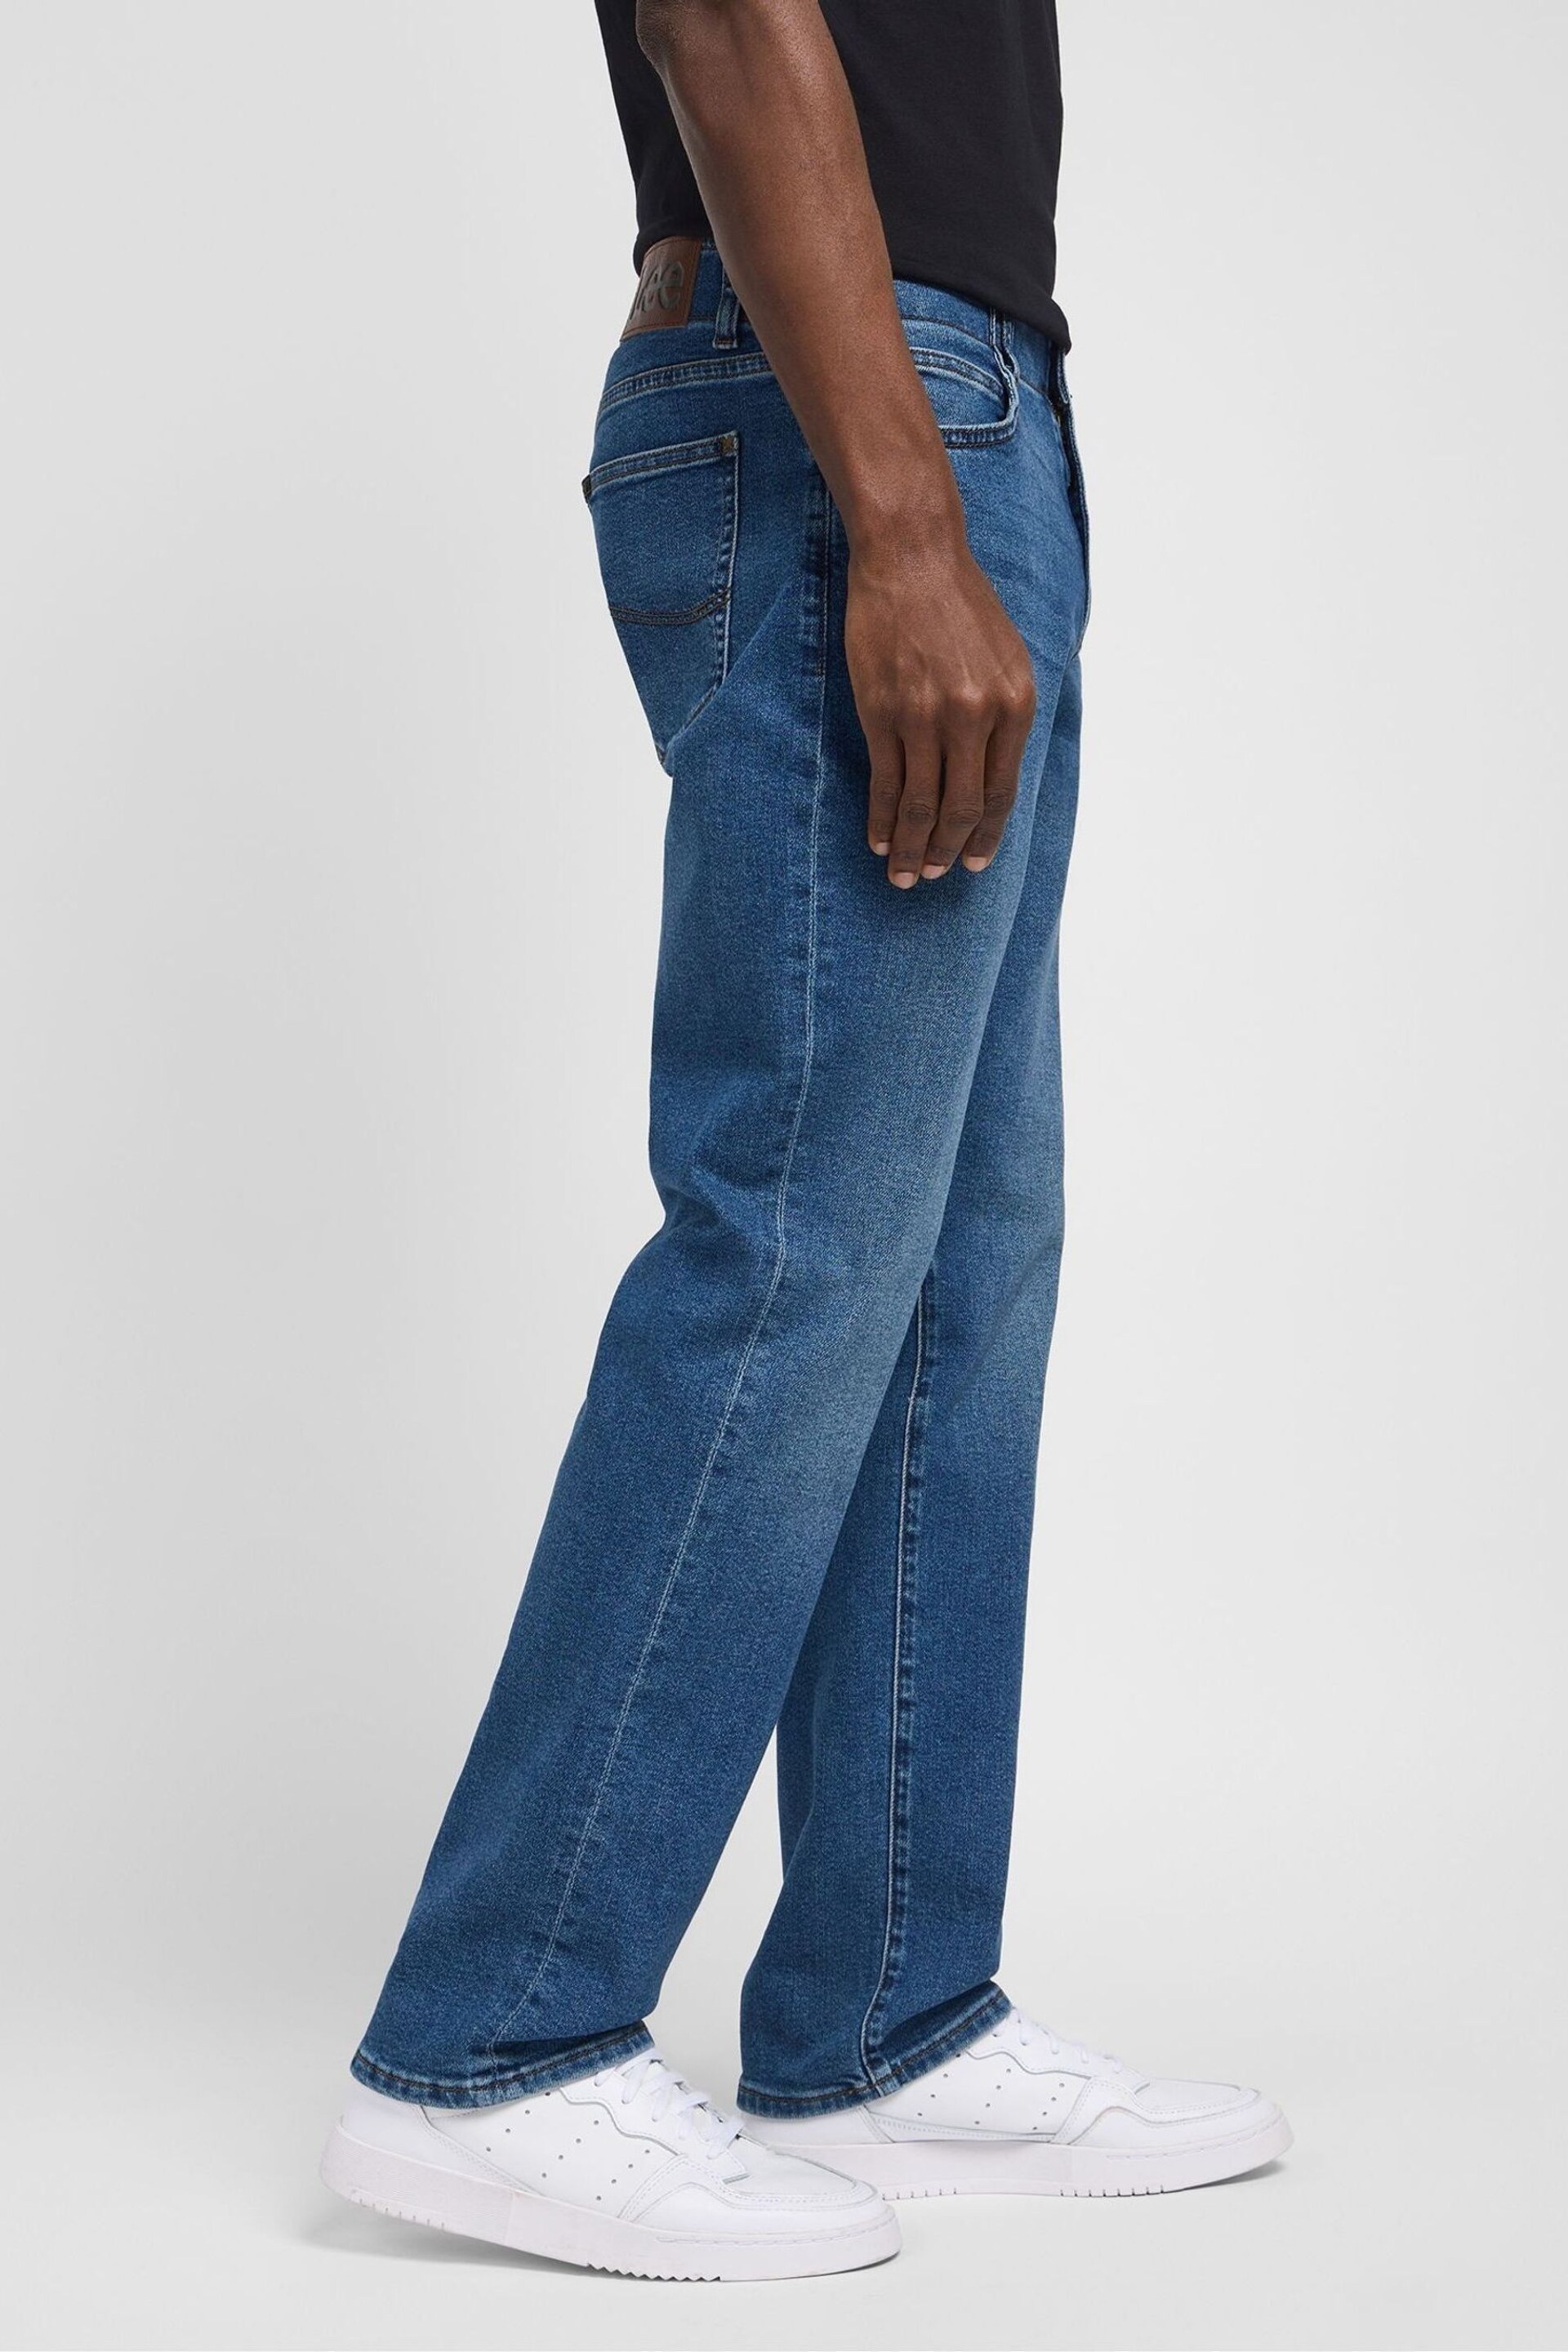 Lee Straight Fit Mid Cream Denim Jeans - Image 4 of 6